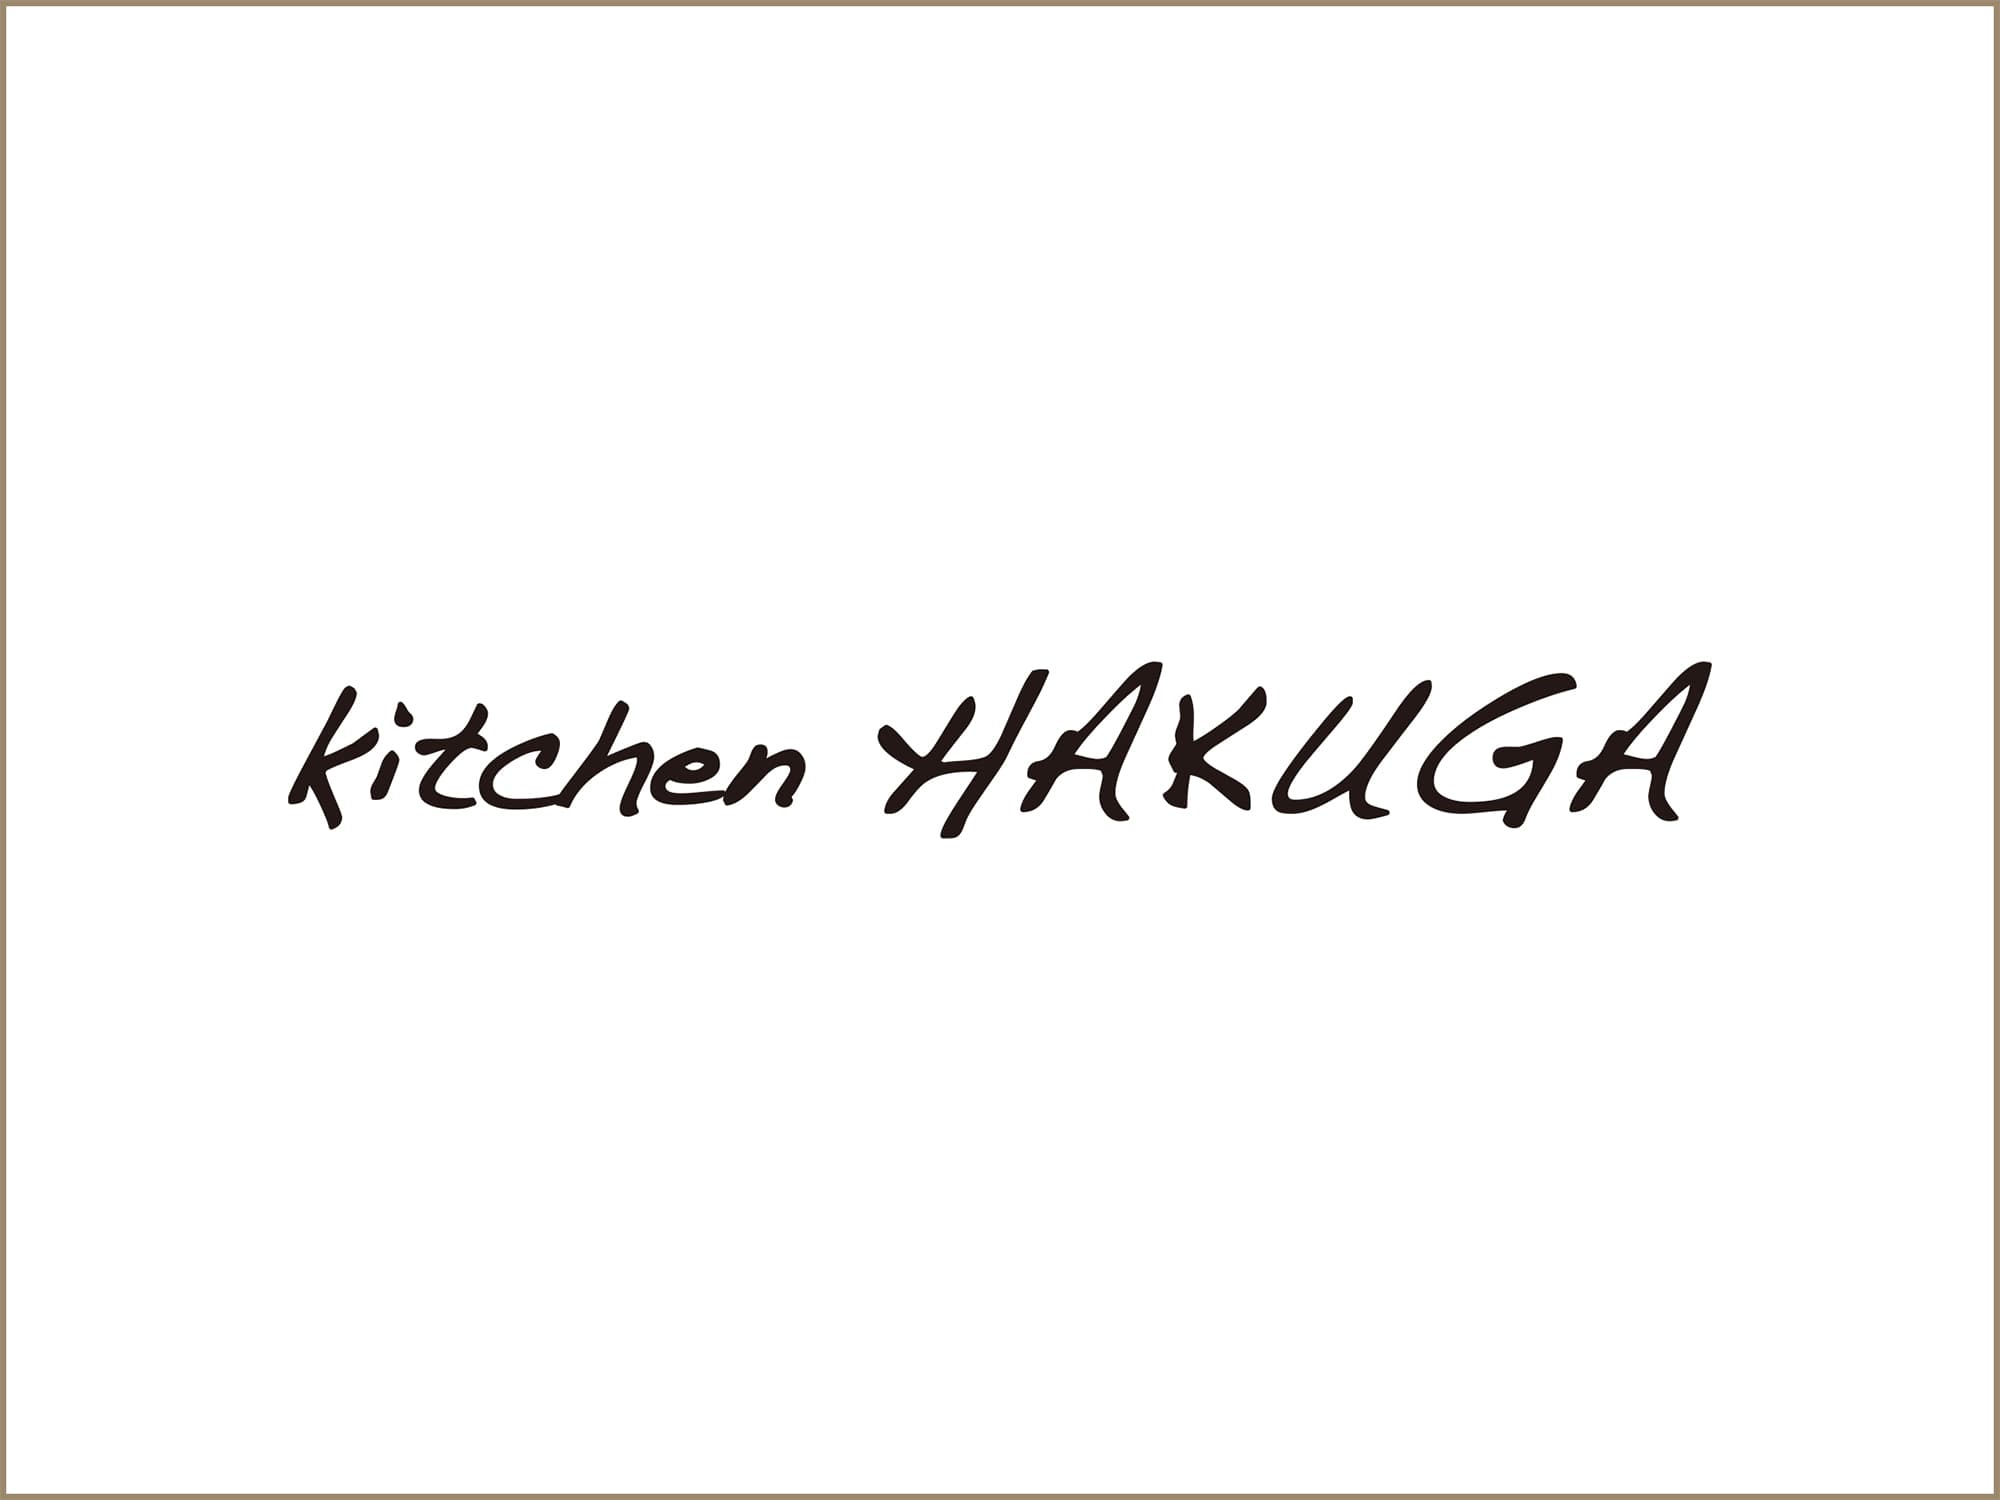 kitchenHAKUGA